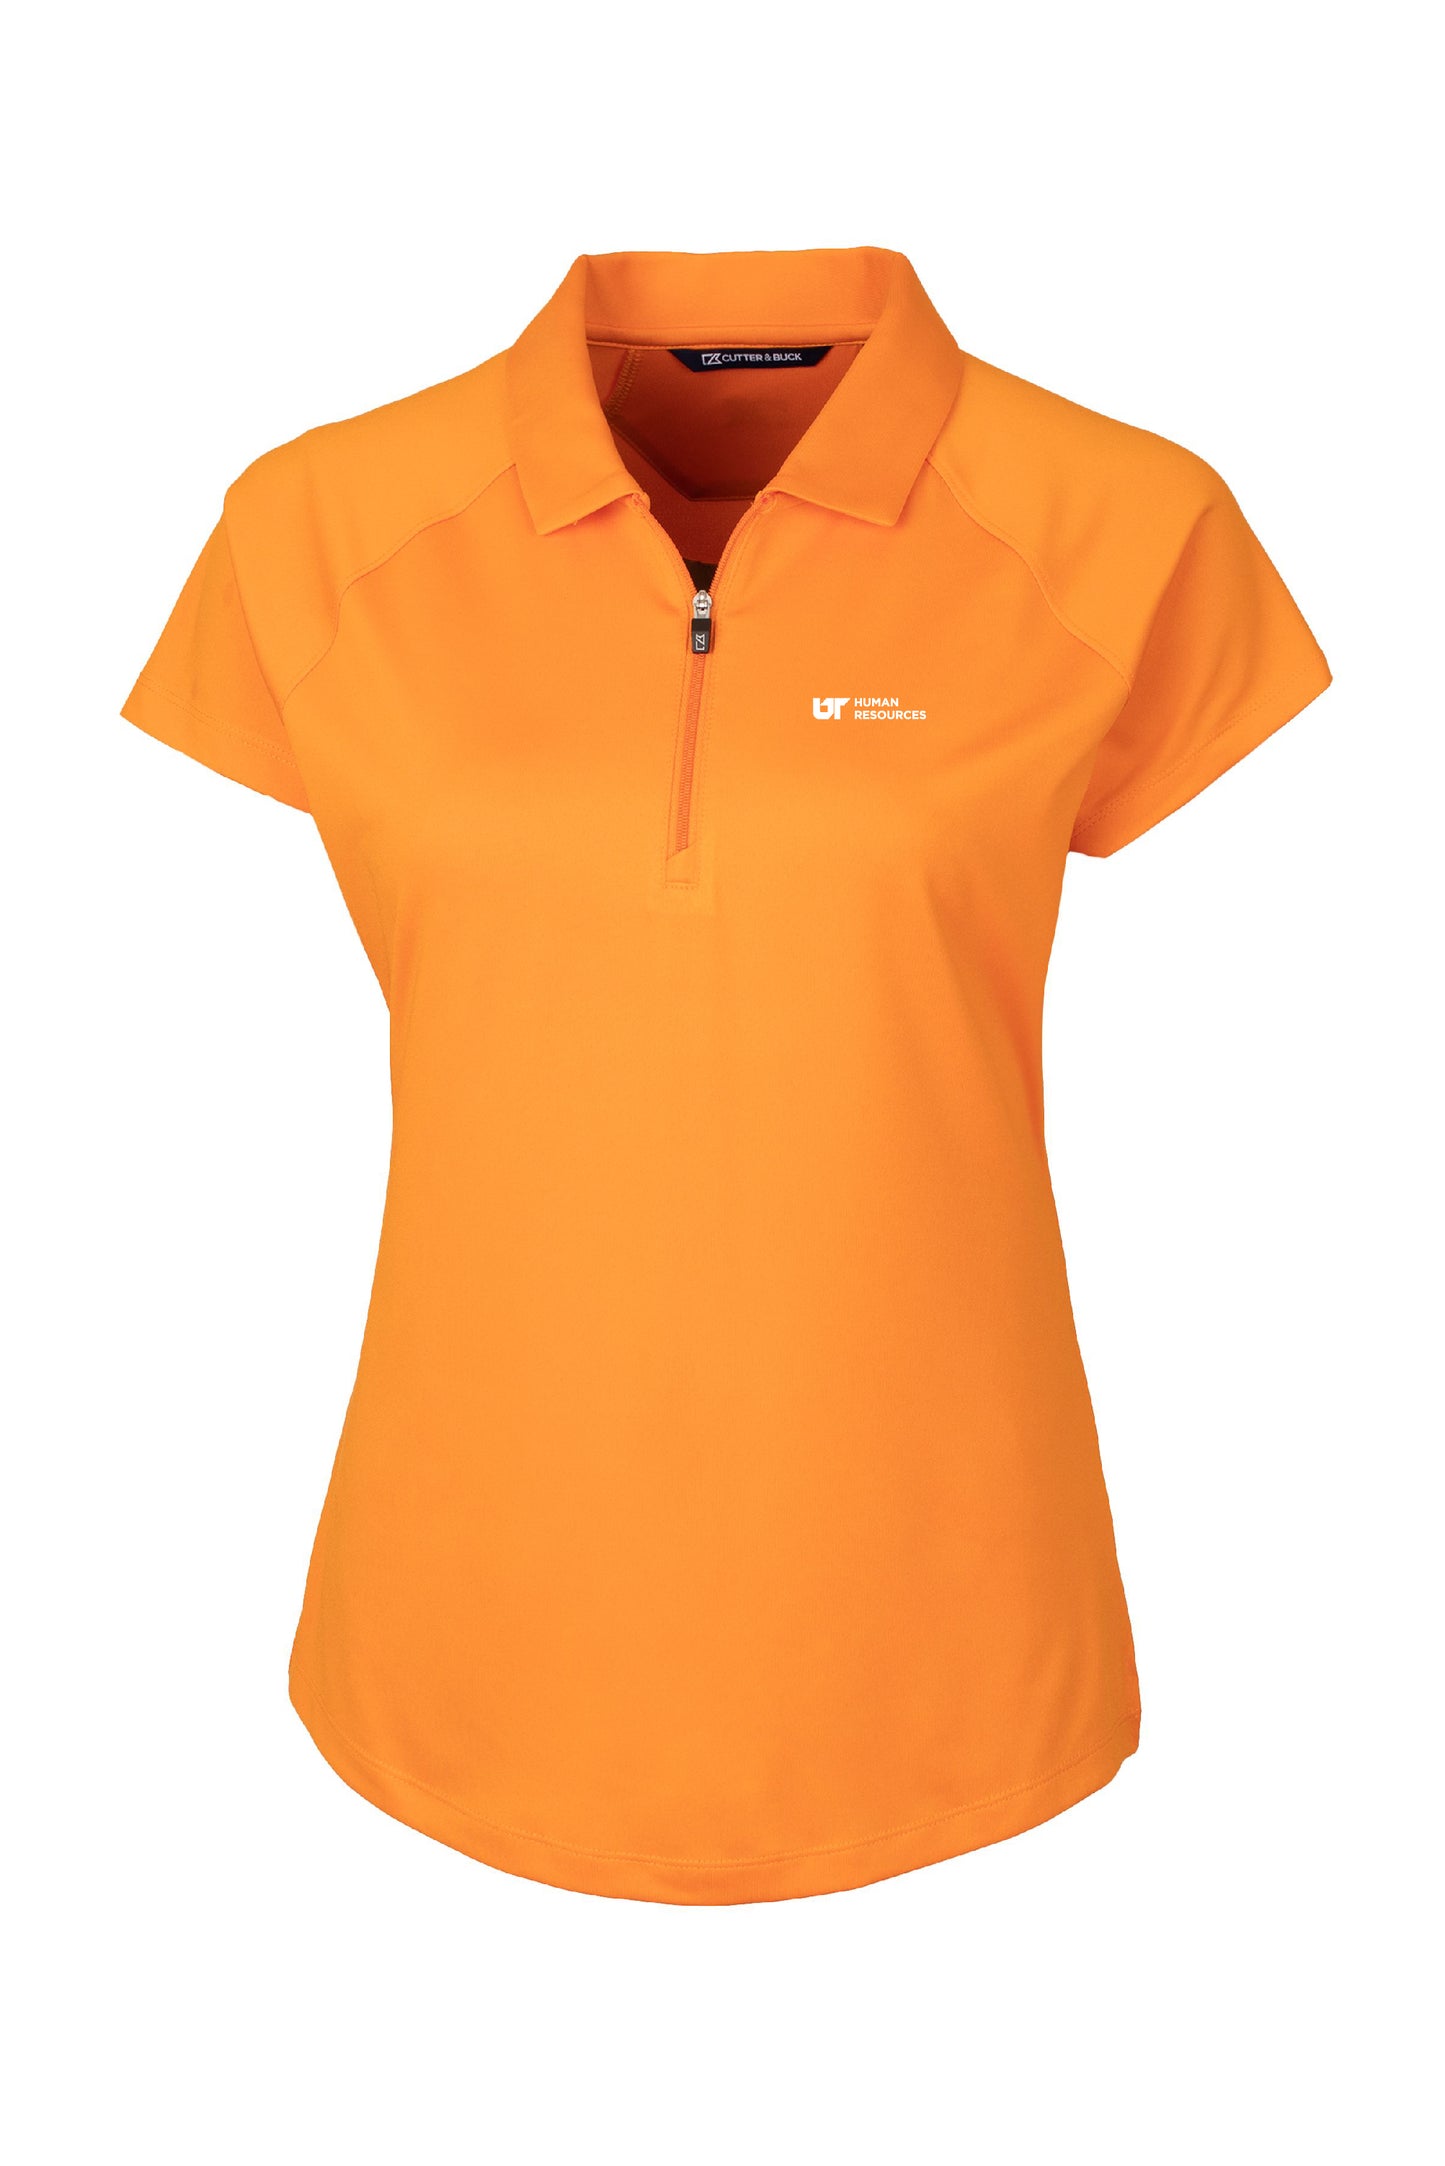 Cutter & Buck Women's Forge Stretch Short Sleeve Polo - Orange